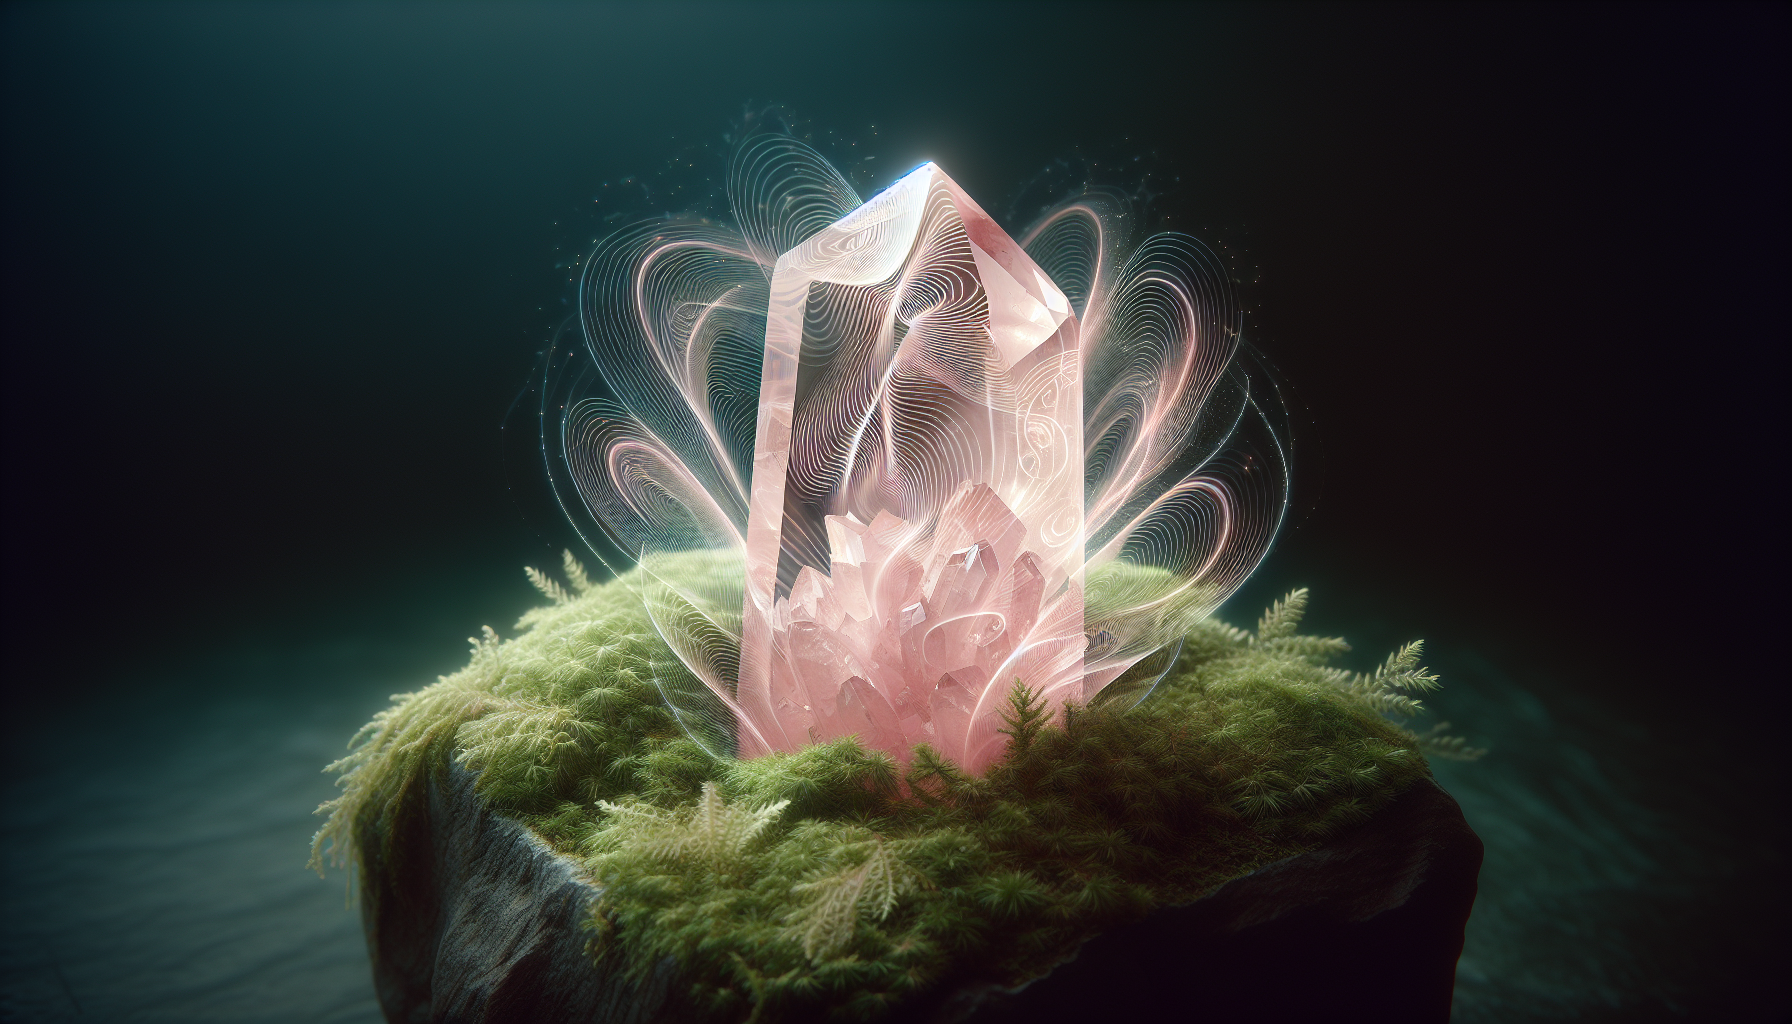 Artistic representation of gentle pink energy surrounding rose quartz